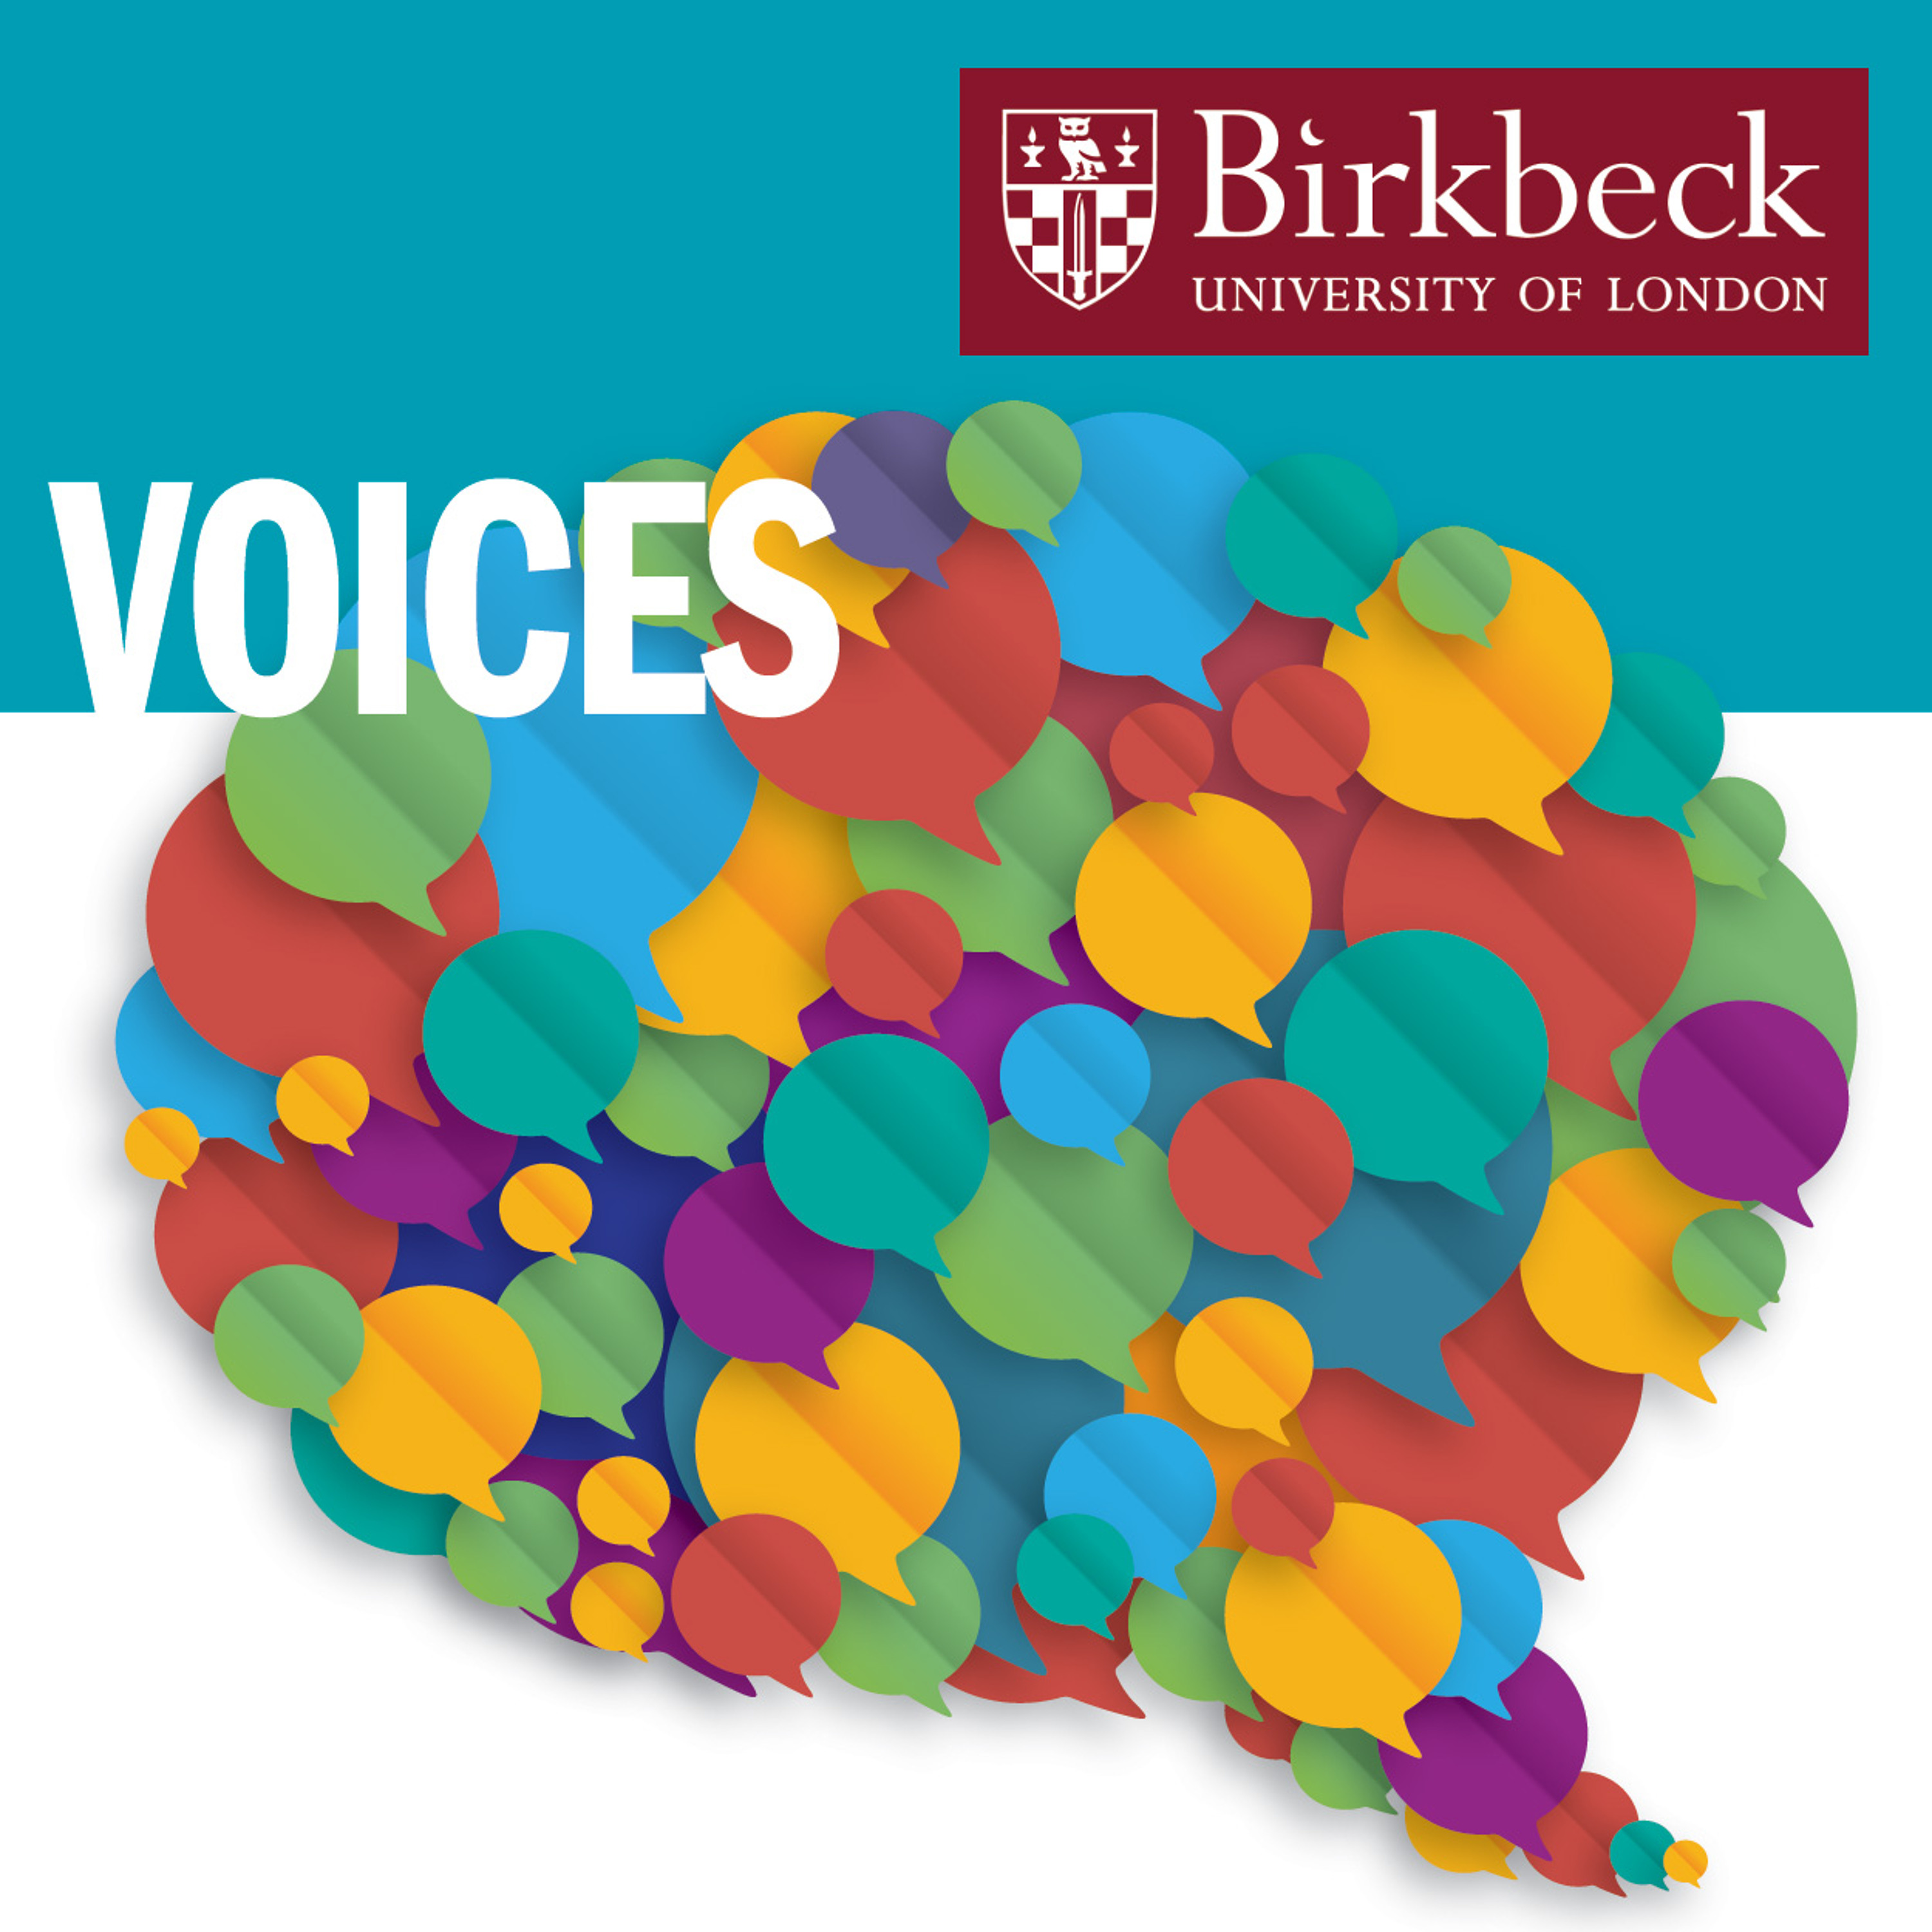 Voices 19. Birkbeck logo download.